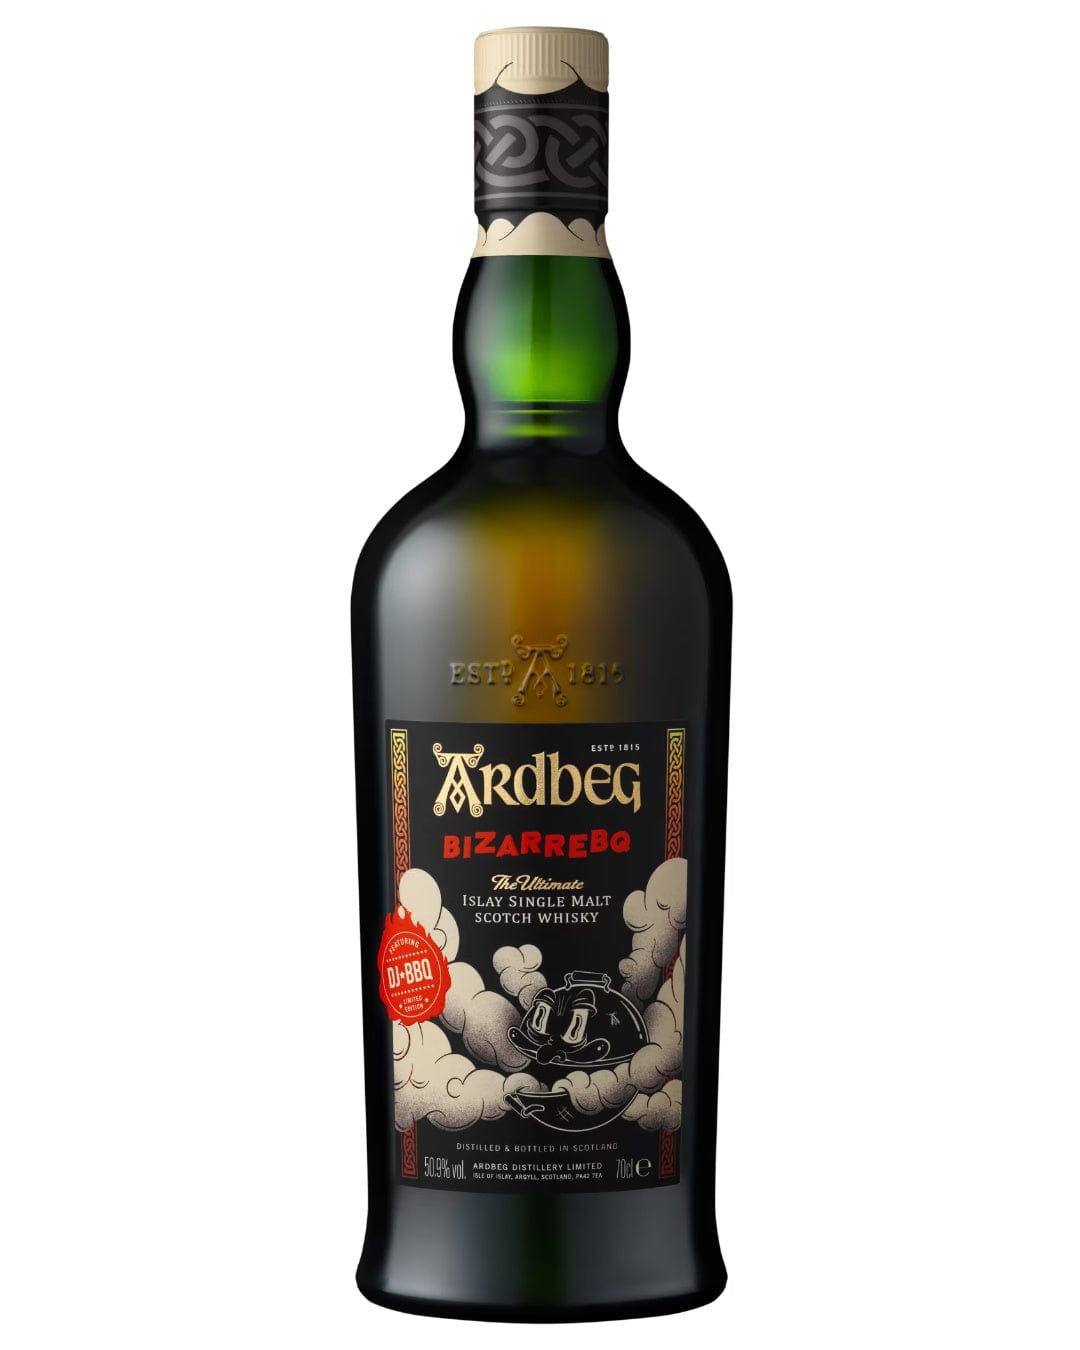 Ardbeg BizarreBQ Limited Edition Single Malt Scotch Whisky, 70 cl